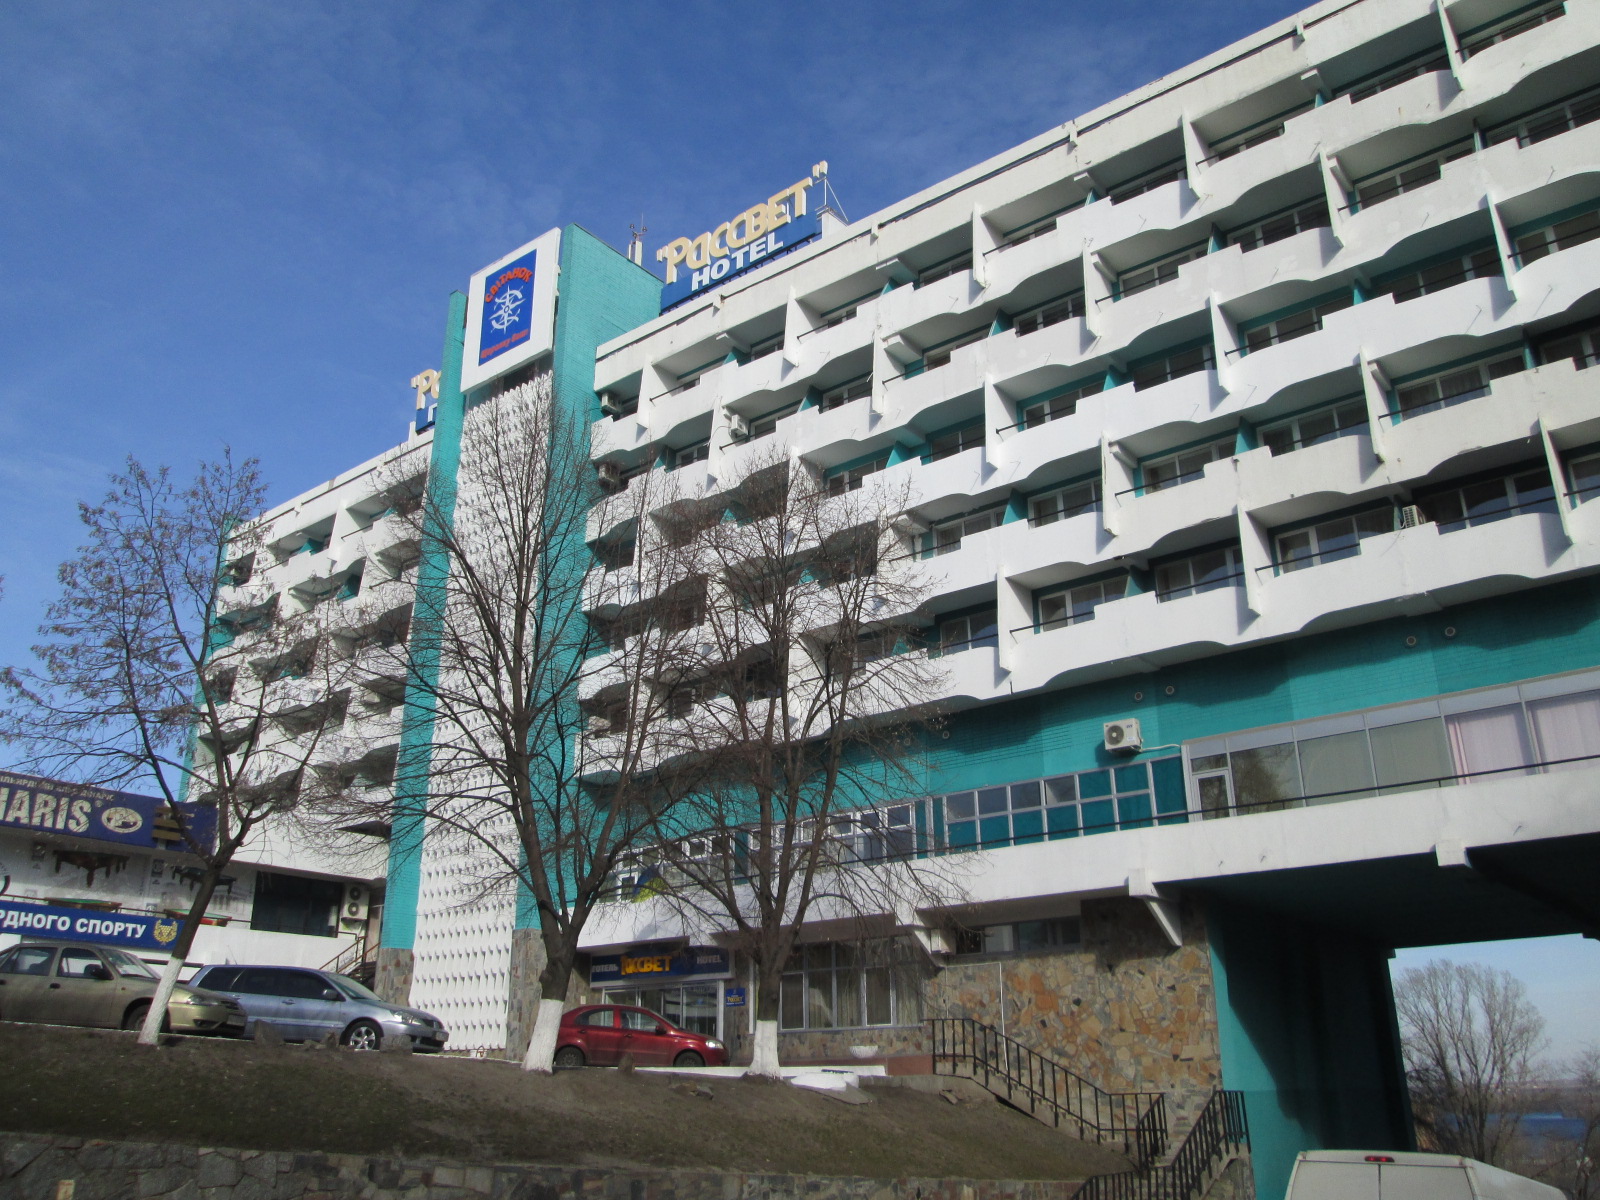 гостиница днепр в днепропетровске